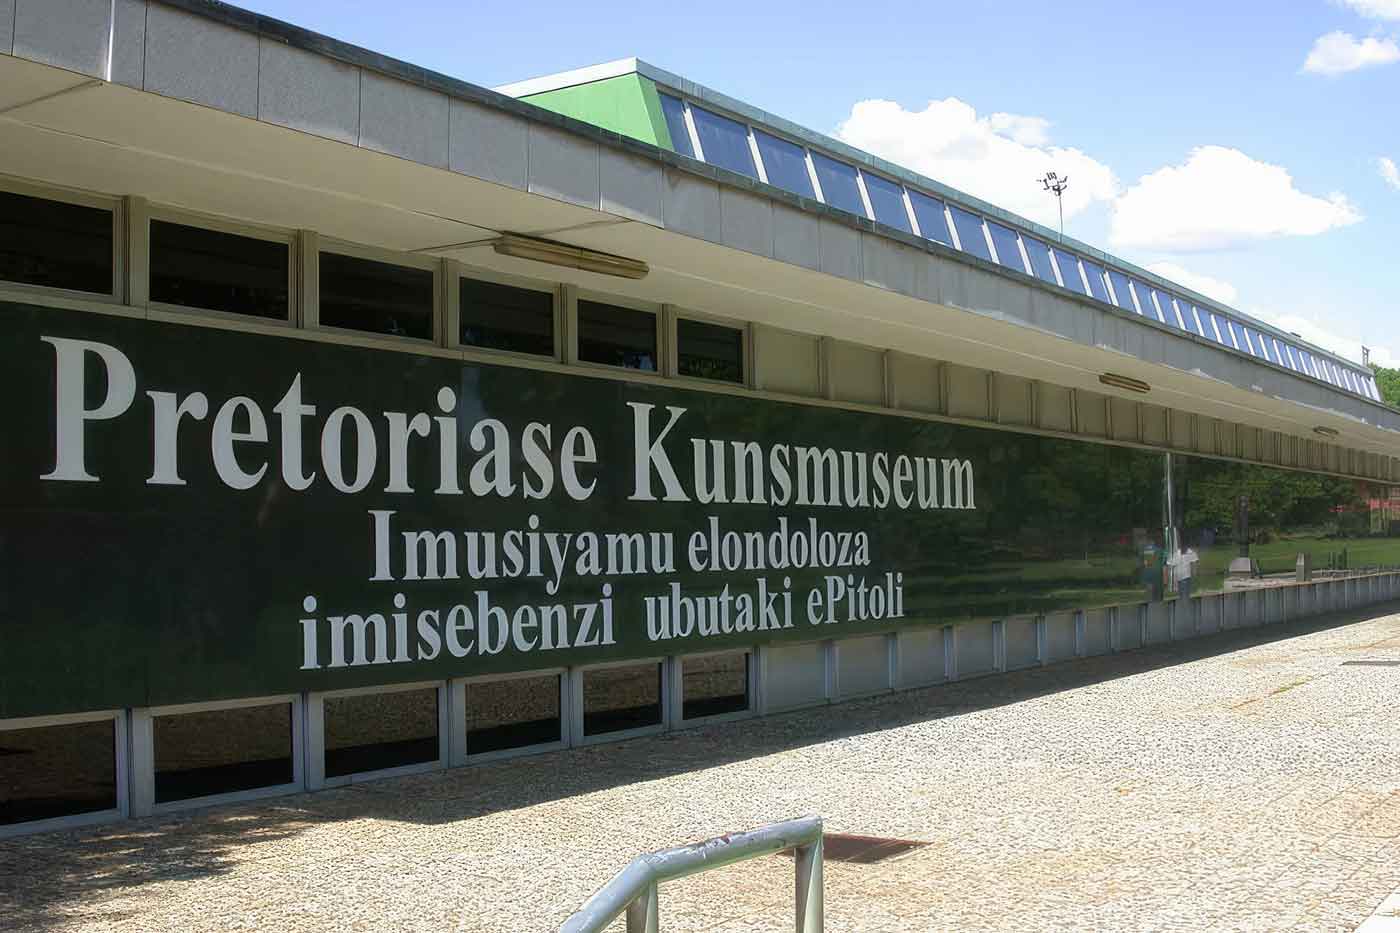 Pretoria Art Museum